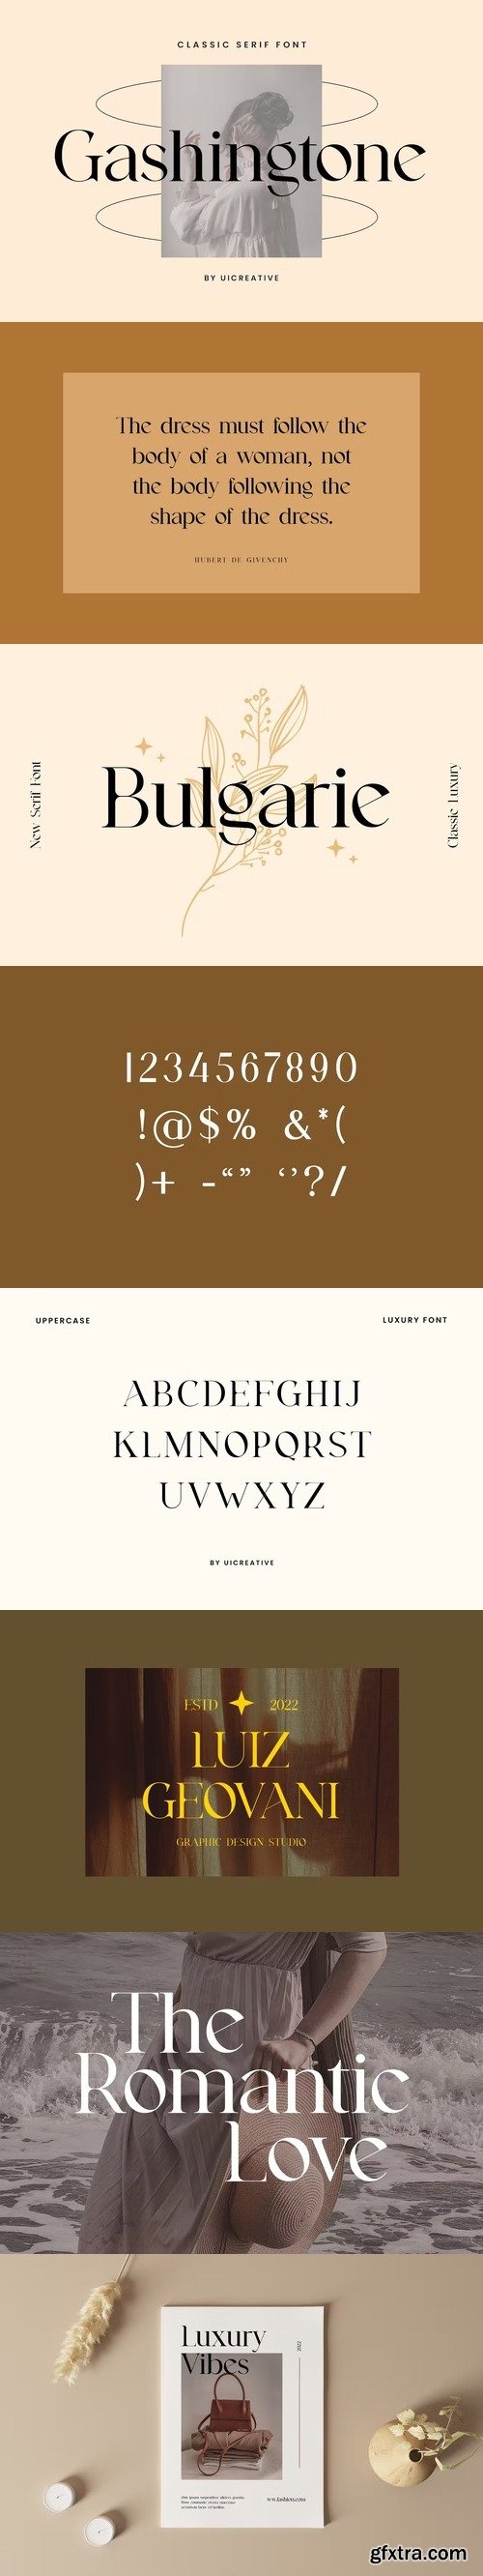 Gashingtone classic serif font